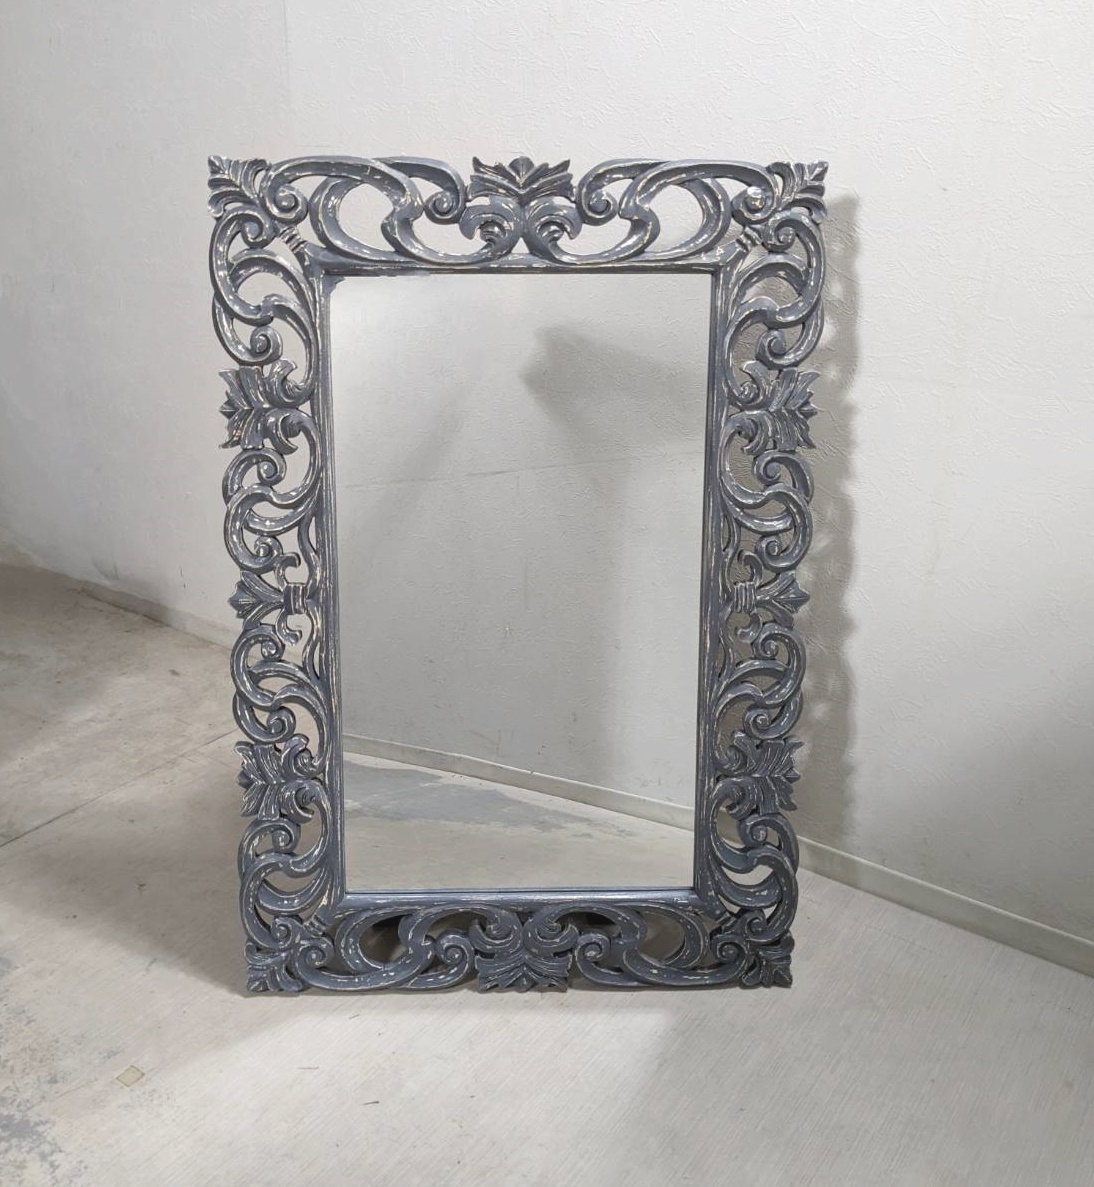  cheeks purity wooden frame ornament establish .. mirror sculpture car Be gray 